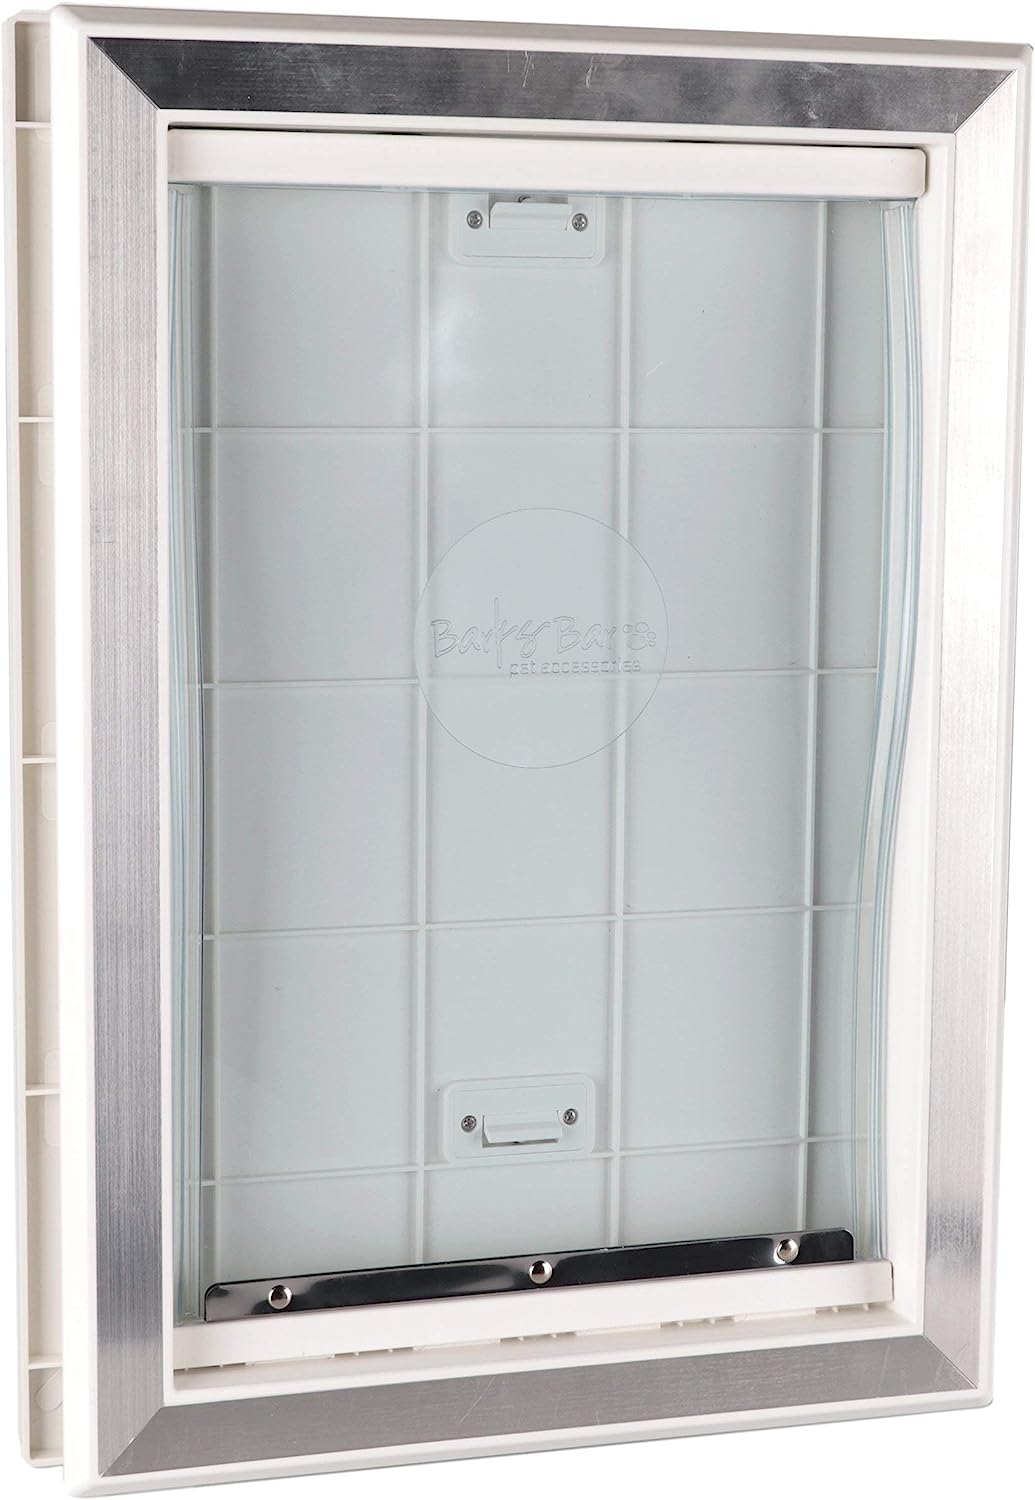 BarksBar Large Plastic Dog Door with Aluminum Lining [...]